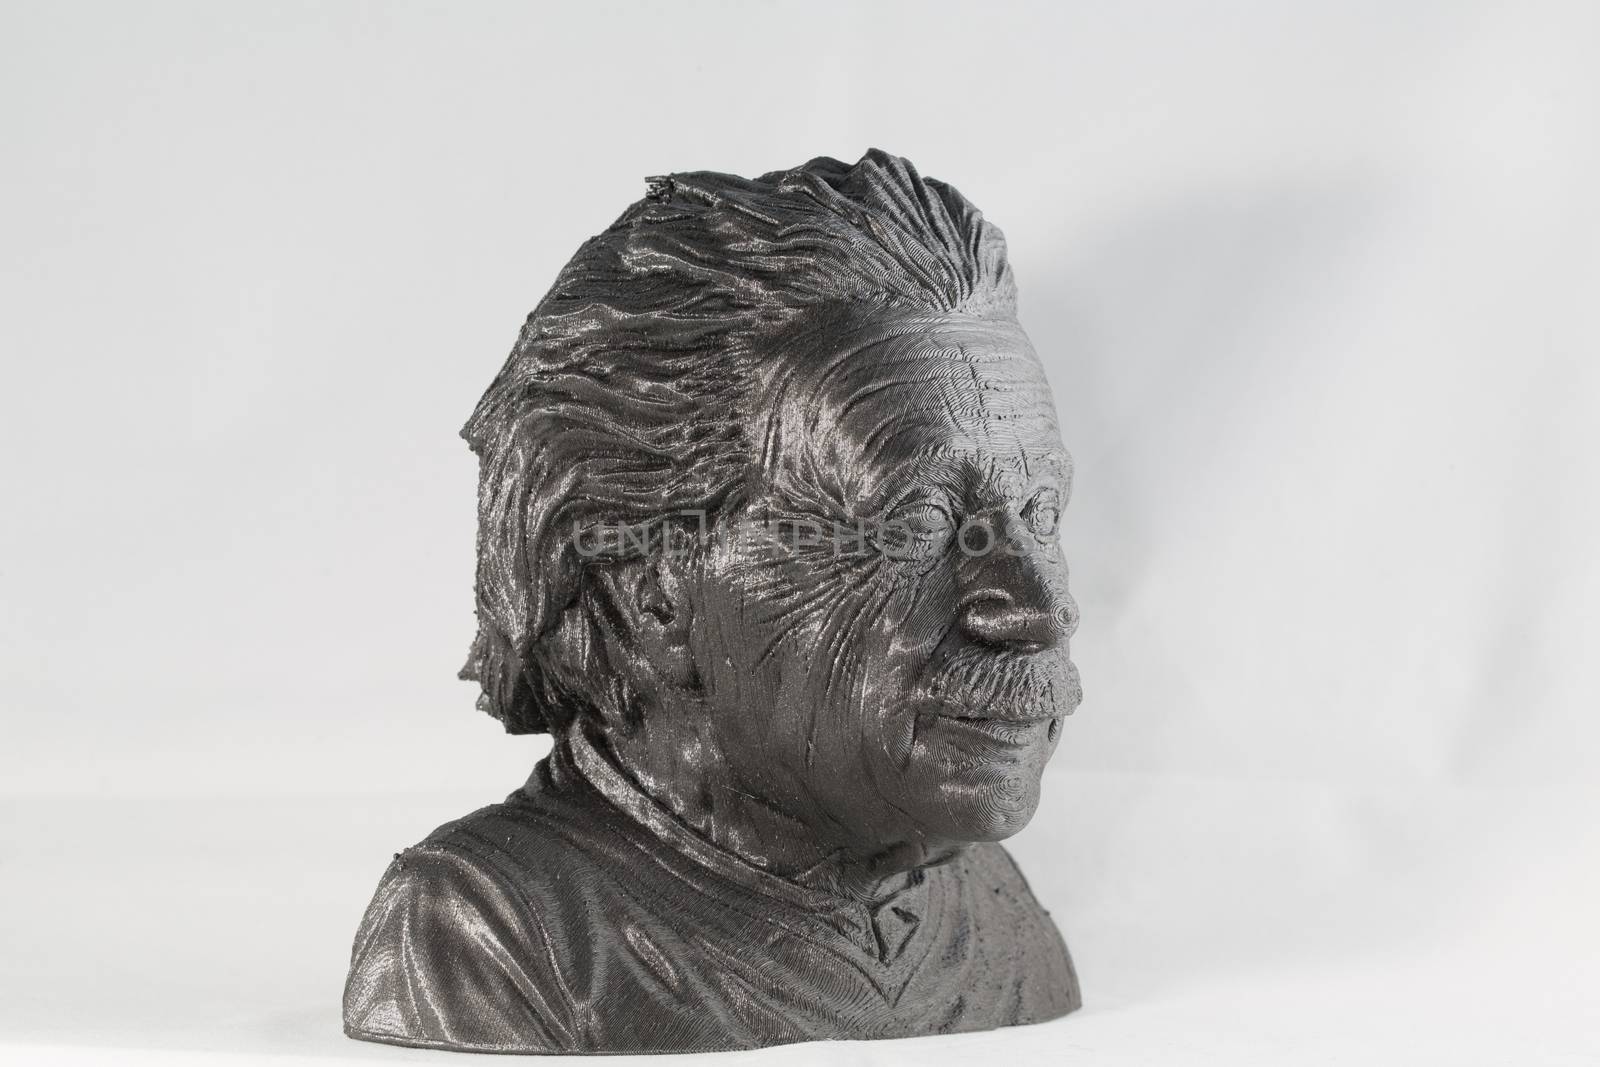 3D printed Albert Einstein Bust in metallic look